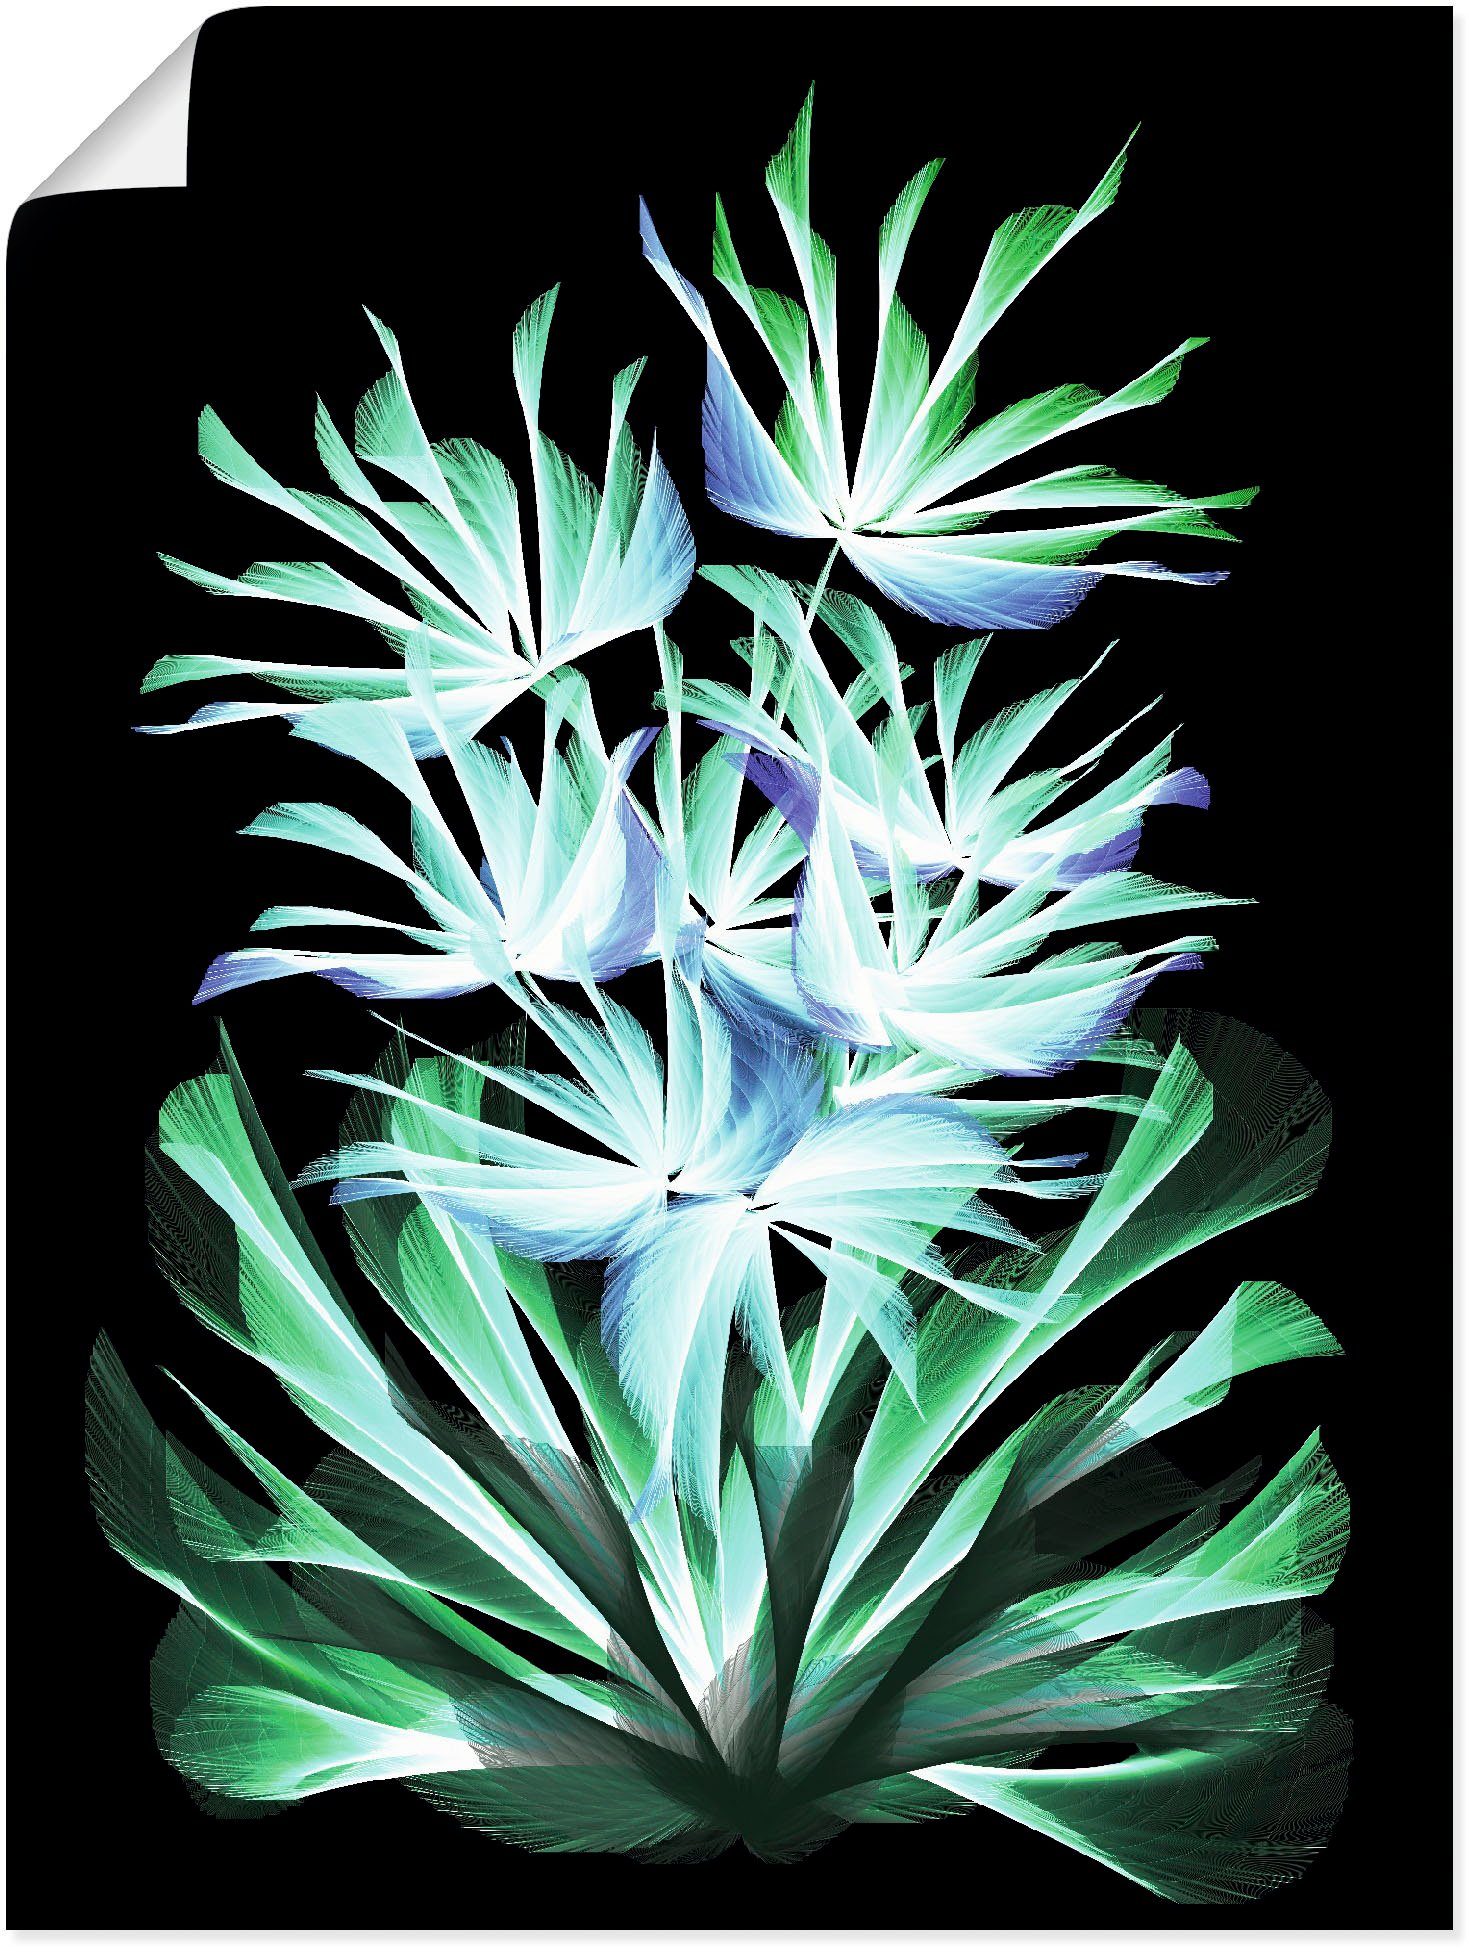 Artland Artprint Leuchtende Nachtblumen in vele afmetingen & productsoorten - artprint van aluminium / artprint voor buiten, artprint op linnen, poster, muursticker / wandfolie ook